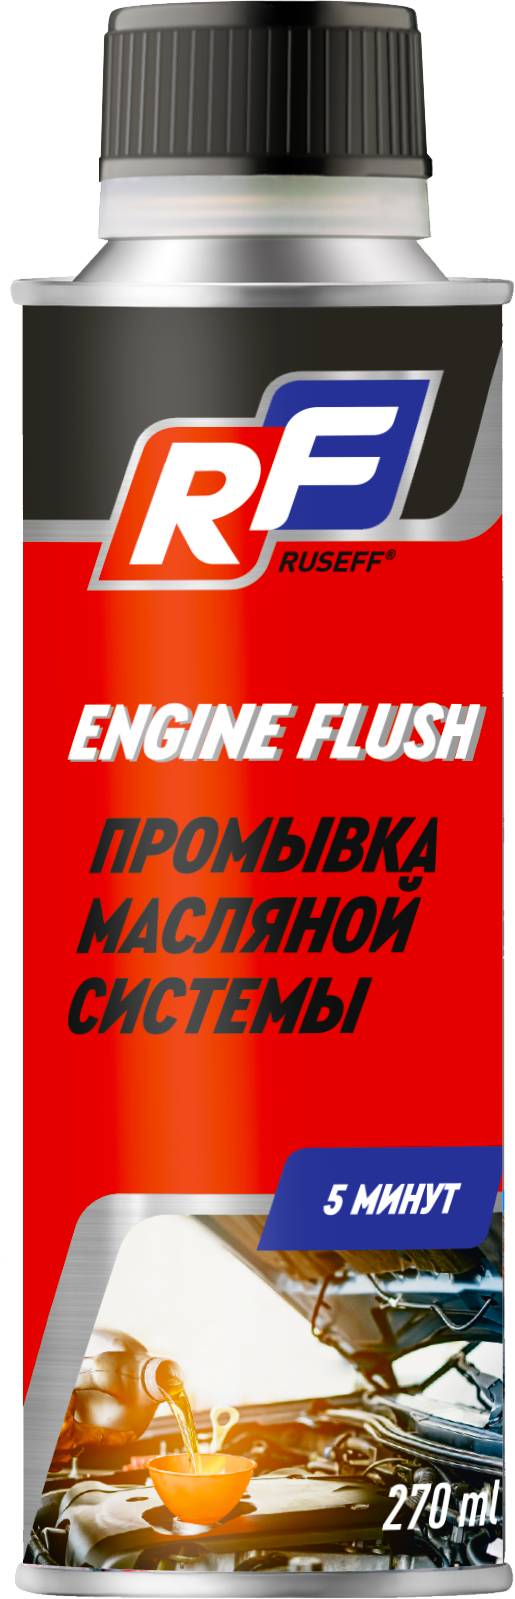 19422N RUSEFF Промывка масляной системы двигателя 5 мин (275 мл)